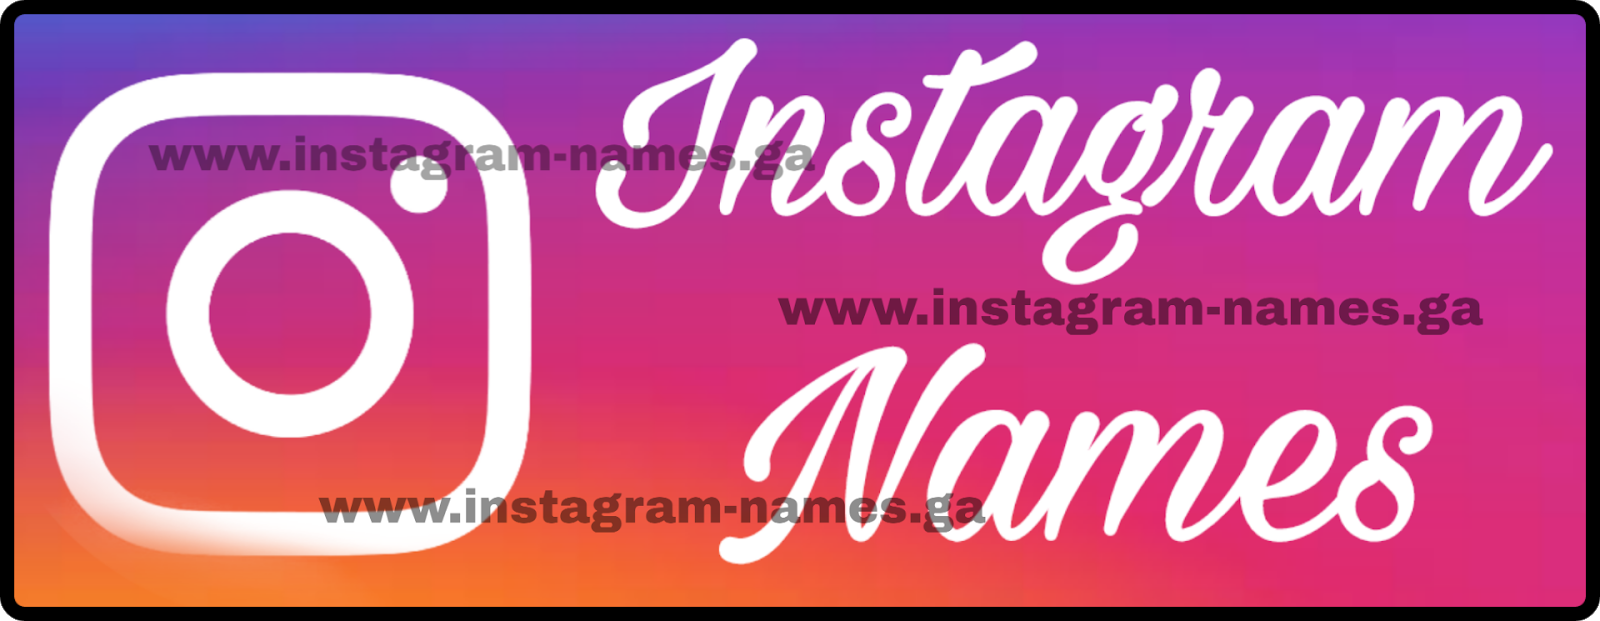 Best Instagram Names To Get Followers 400 Instagram Usernames Ideas